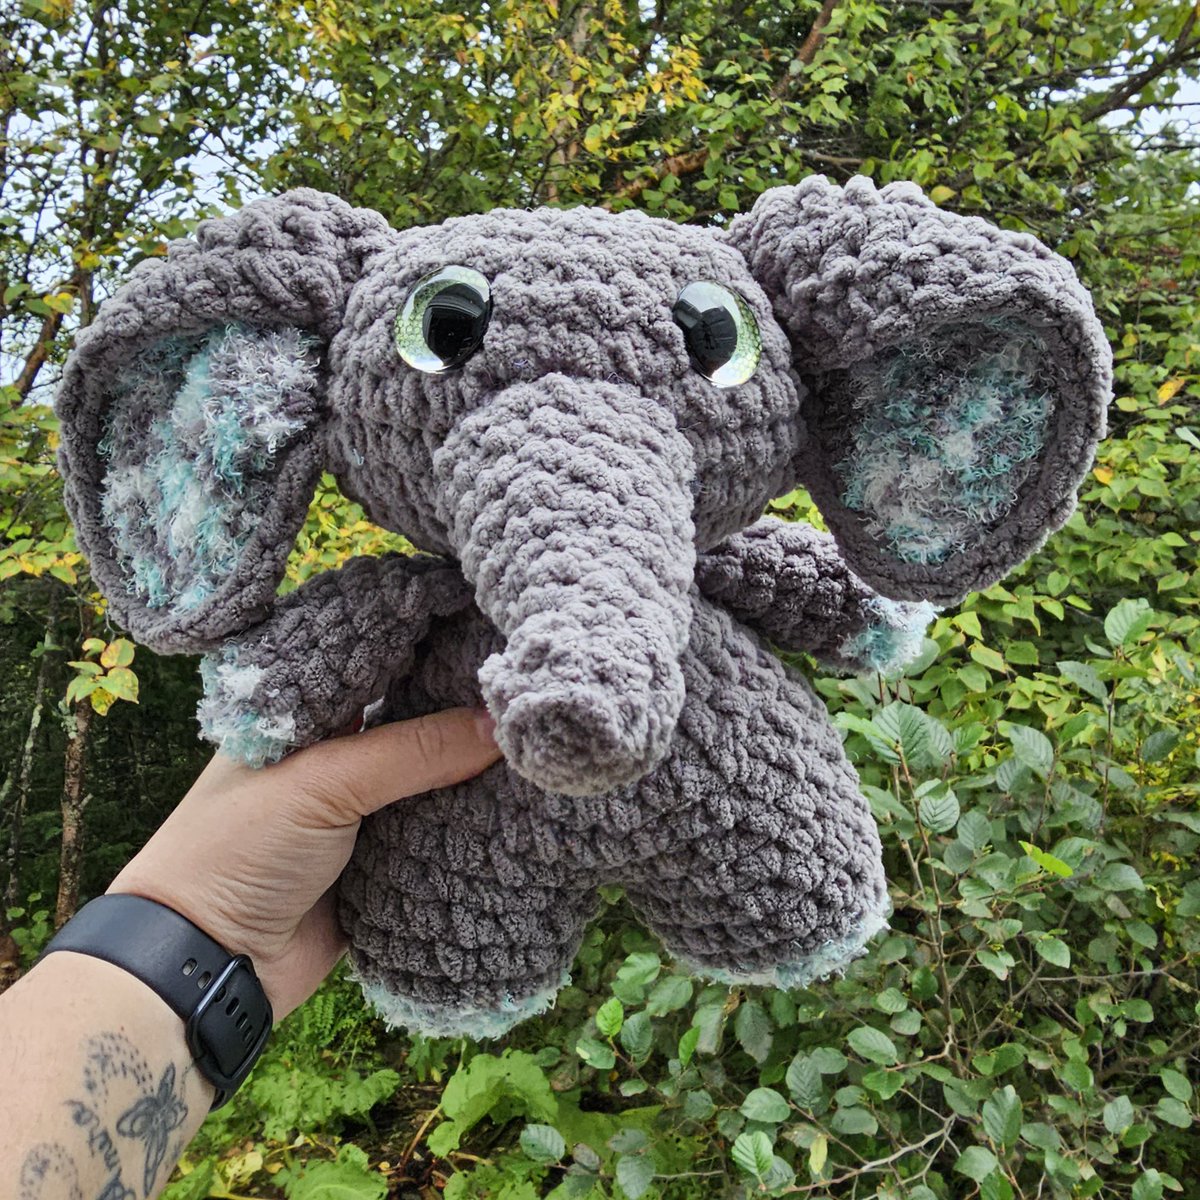 One more elephant, this time with some soft, fuzzy accents
#elephant #crochetelephant #crochet #crocheter #crochetstuffedanimals #handmade #handmadeisbest #supporthandmade #shopsmall #marketprep #makersgonnamake #amigurumi #yarnlife  #bernatblanketyarn #bernatpipsqueak